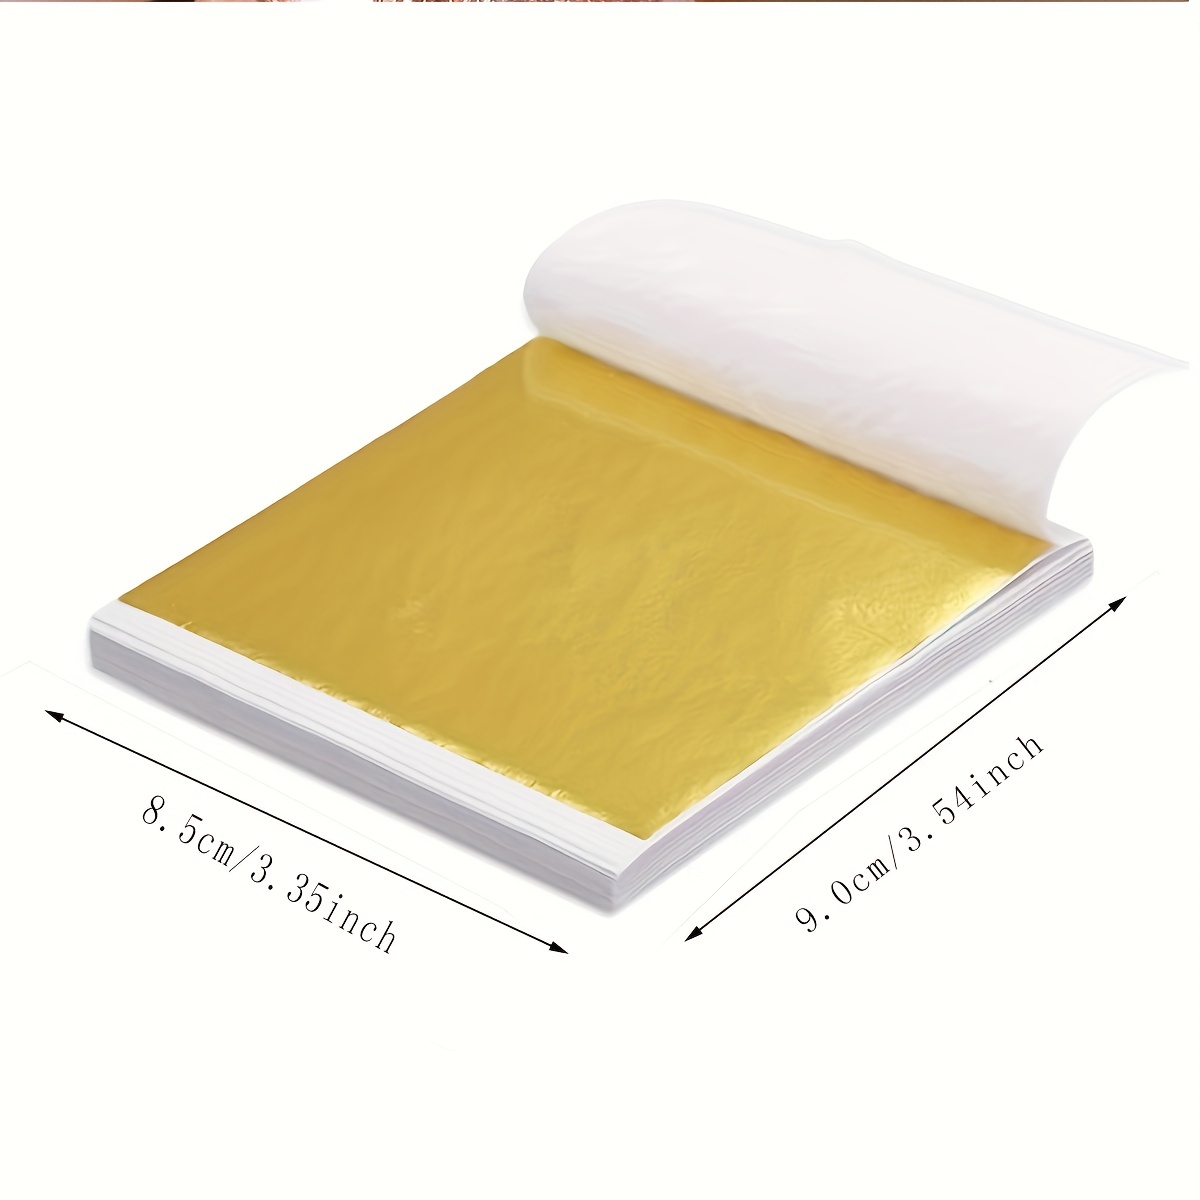 Gold Leaf Sheets - 100 Gold Foil Sheets - 9 x 9 cm Multipurpose Gold Leaf  for Nails, Art & DIY Projects, Picture Frames, Home Walls, Interior and  Multi Artistic Decoration (Foil) 